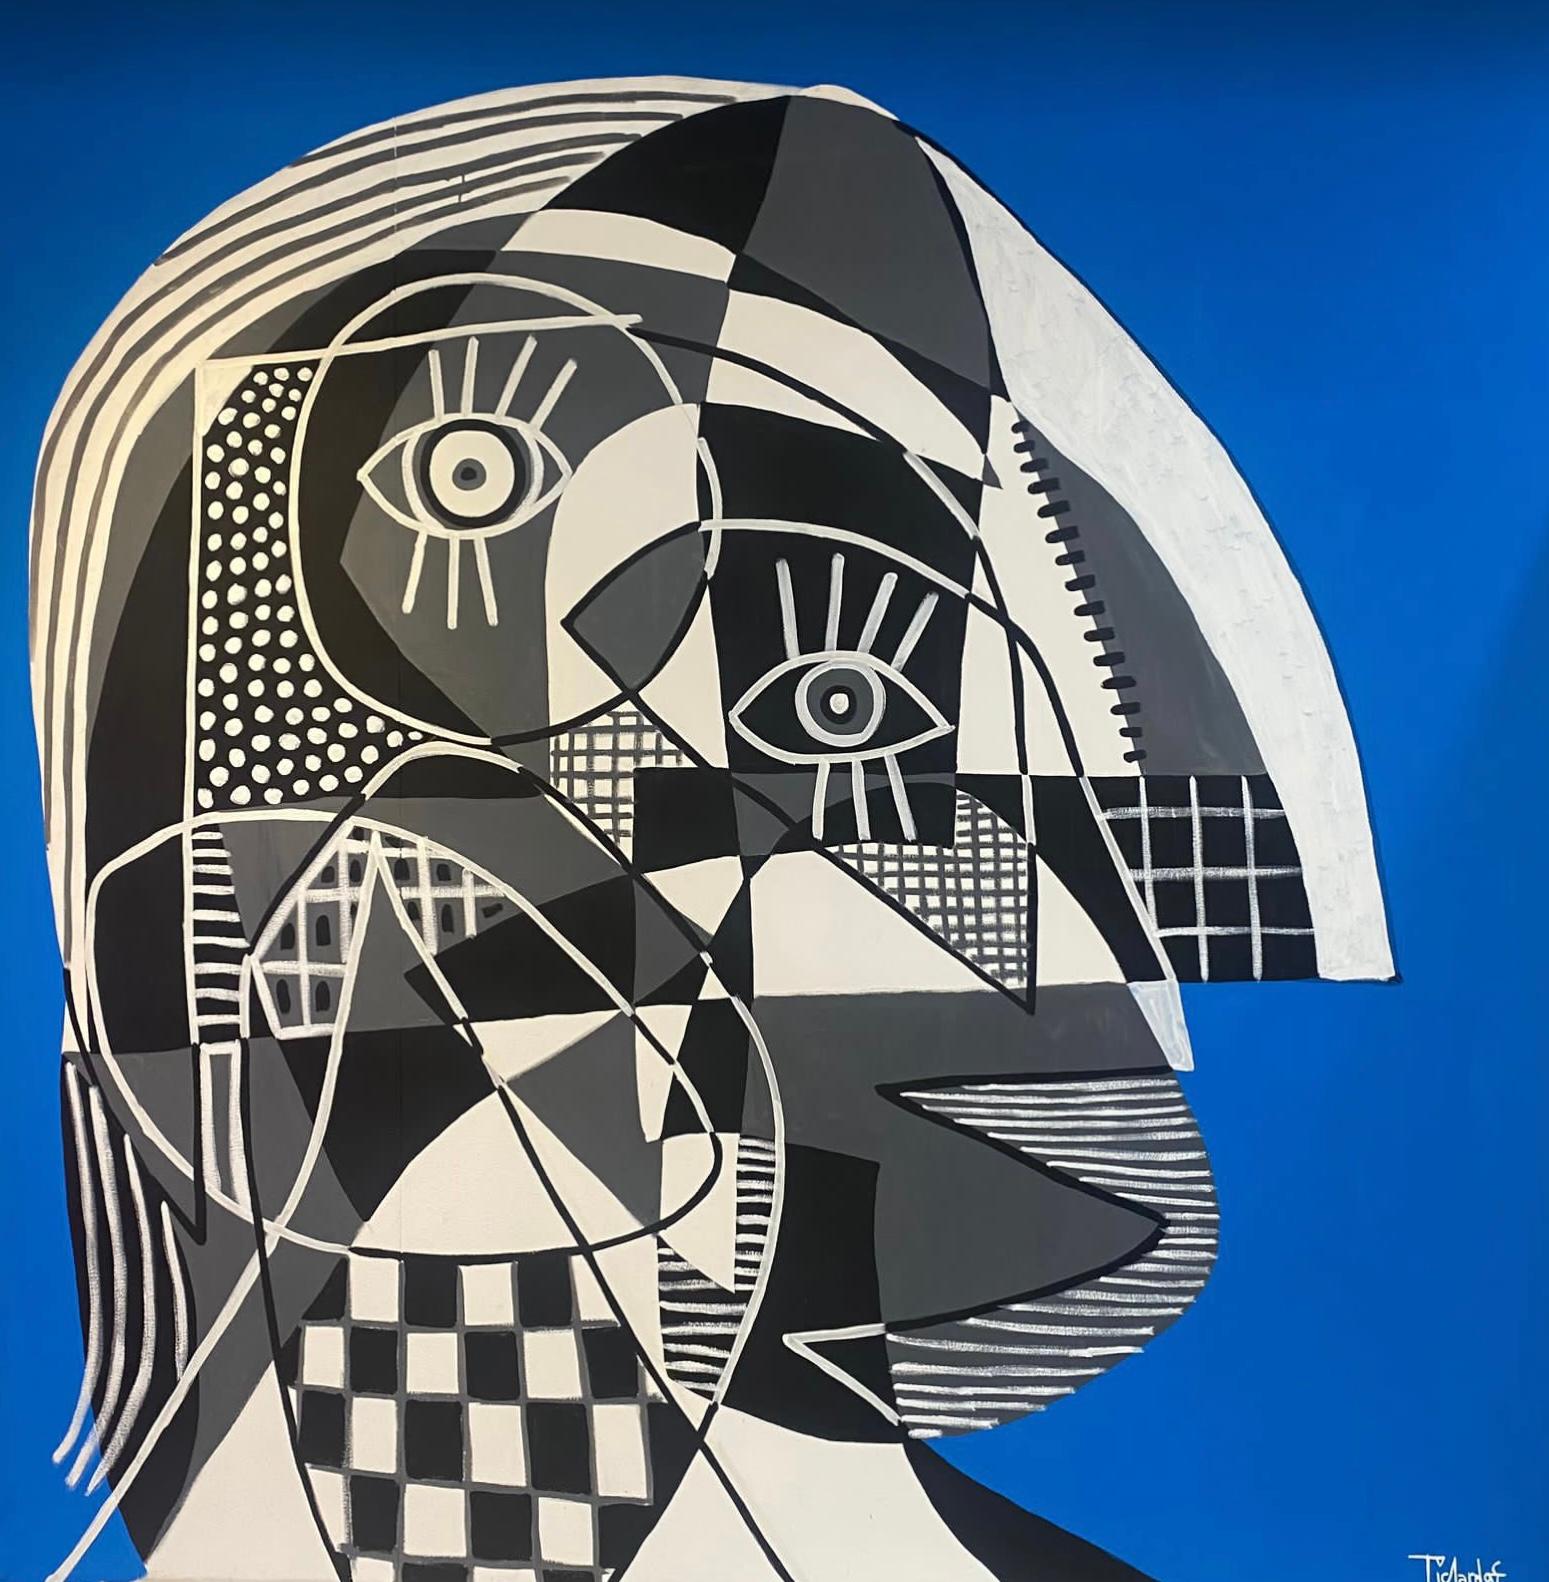 Contemporary Art, Abstract Painting
Acrylic on canvas
190x190cm
Signed 





About the artist
Enrique Pichardo (Mexico City, 1973) graduated from Escuela Nacional de Pintura, Escultura y Grabado (ENPEG) “La Esmeralda”. As a Mexican Contemporary